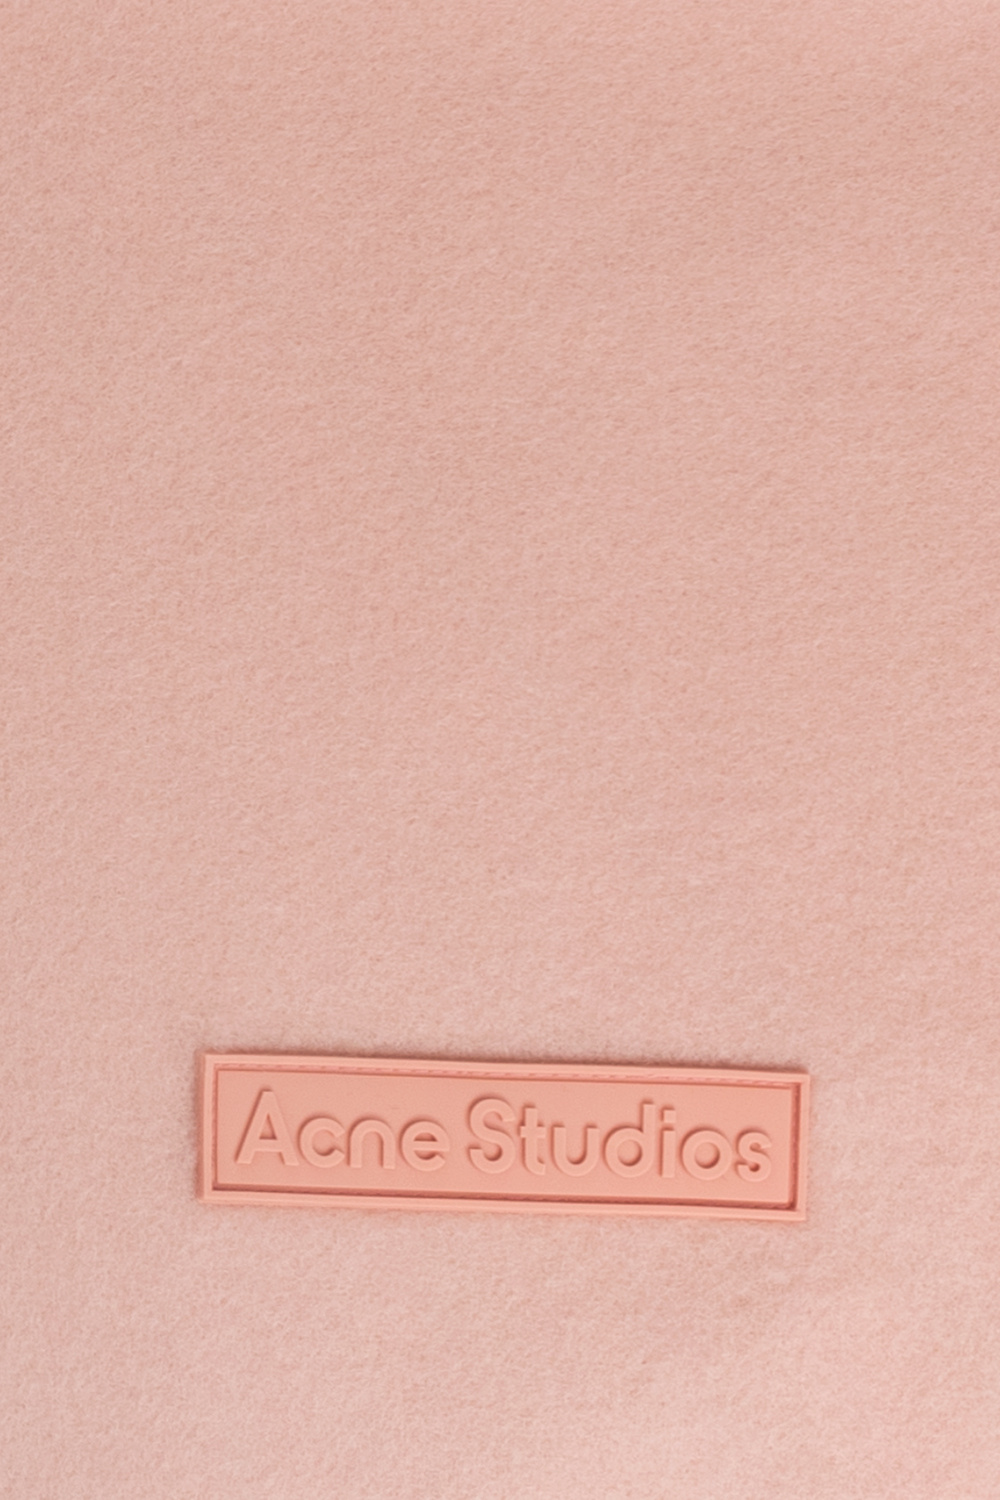 Acne Studios THIS SEASONS MUST-HAVES